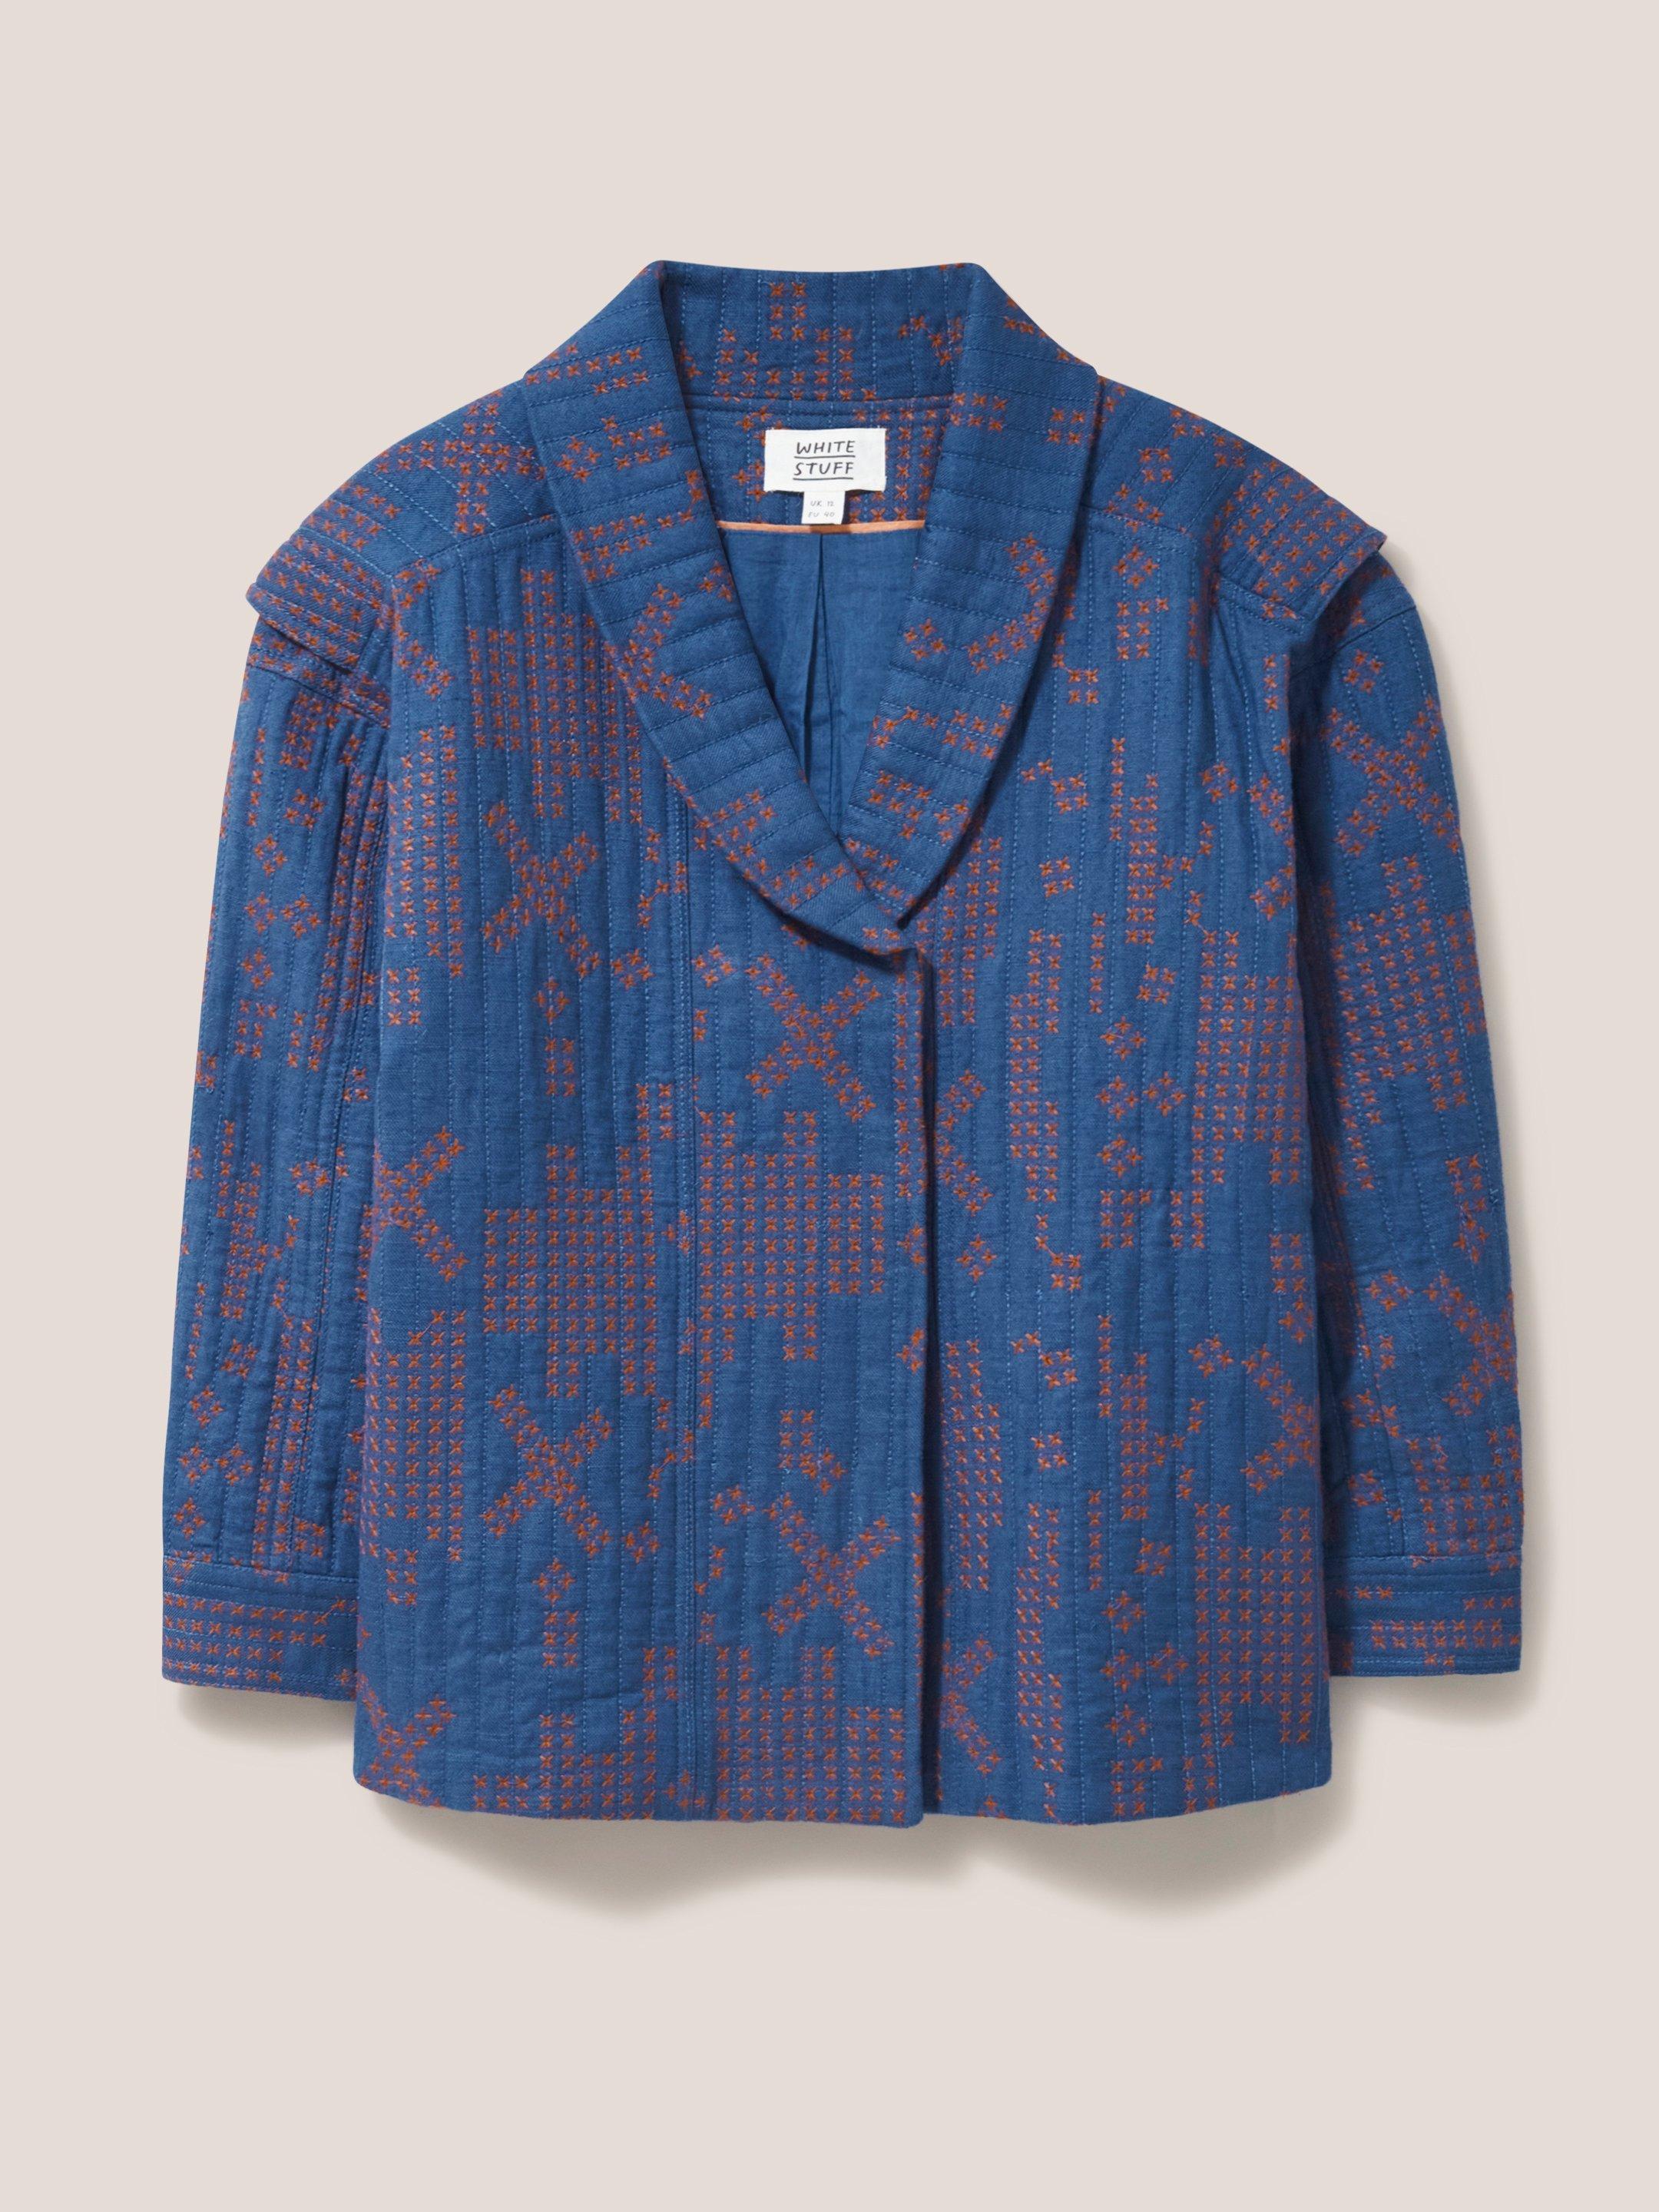 Della Cross Stitch Jacket in BLUE MLT - FLAT FRONT